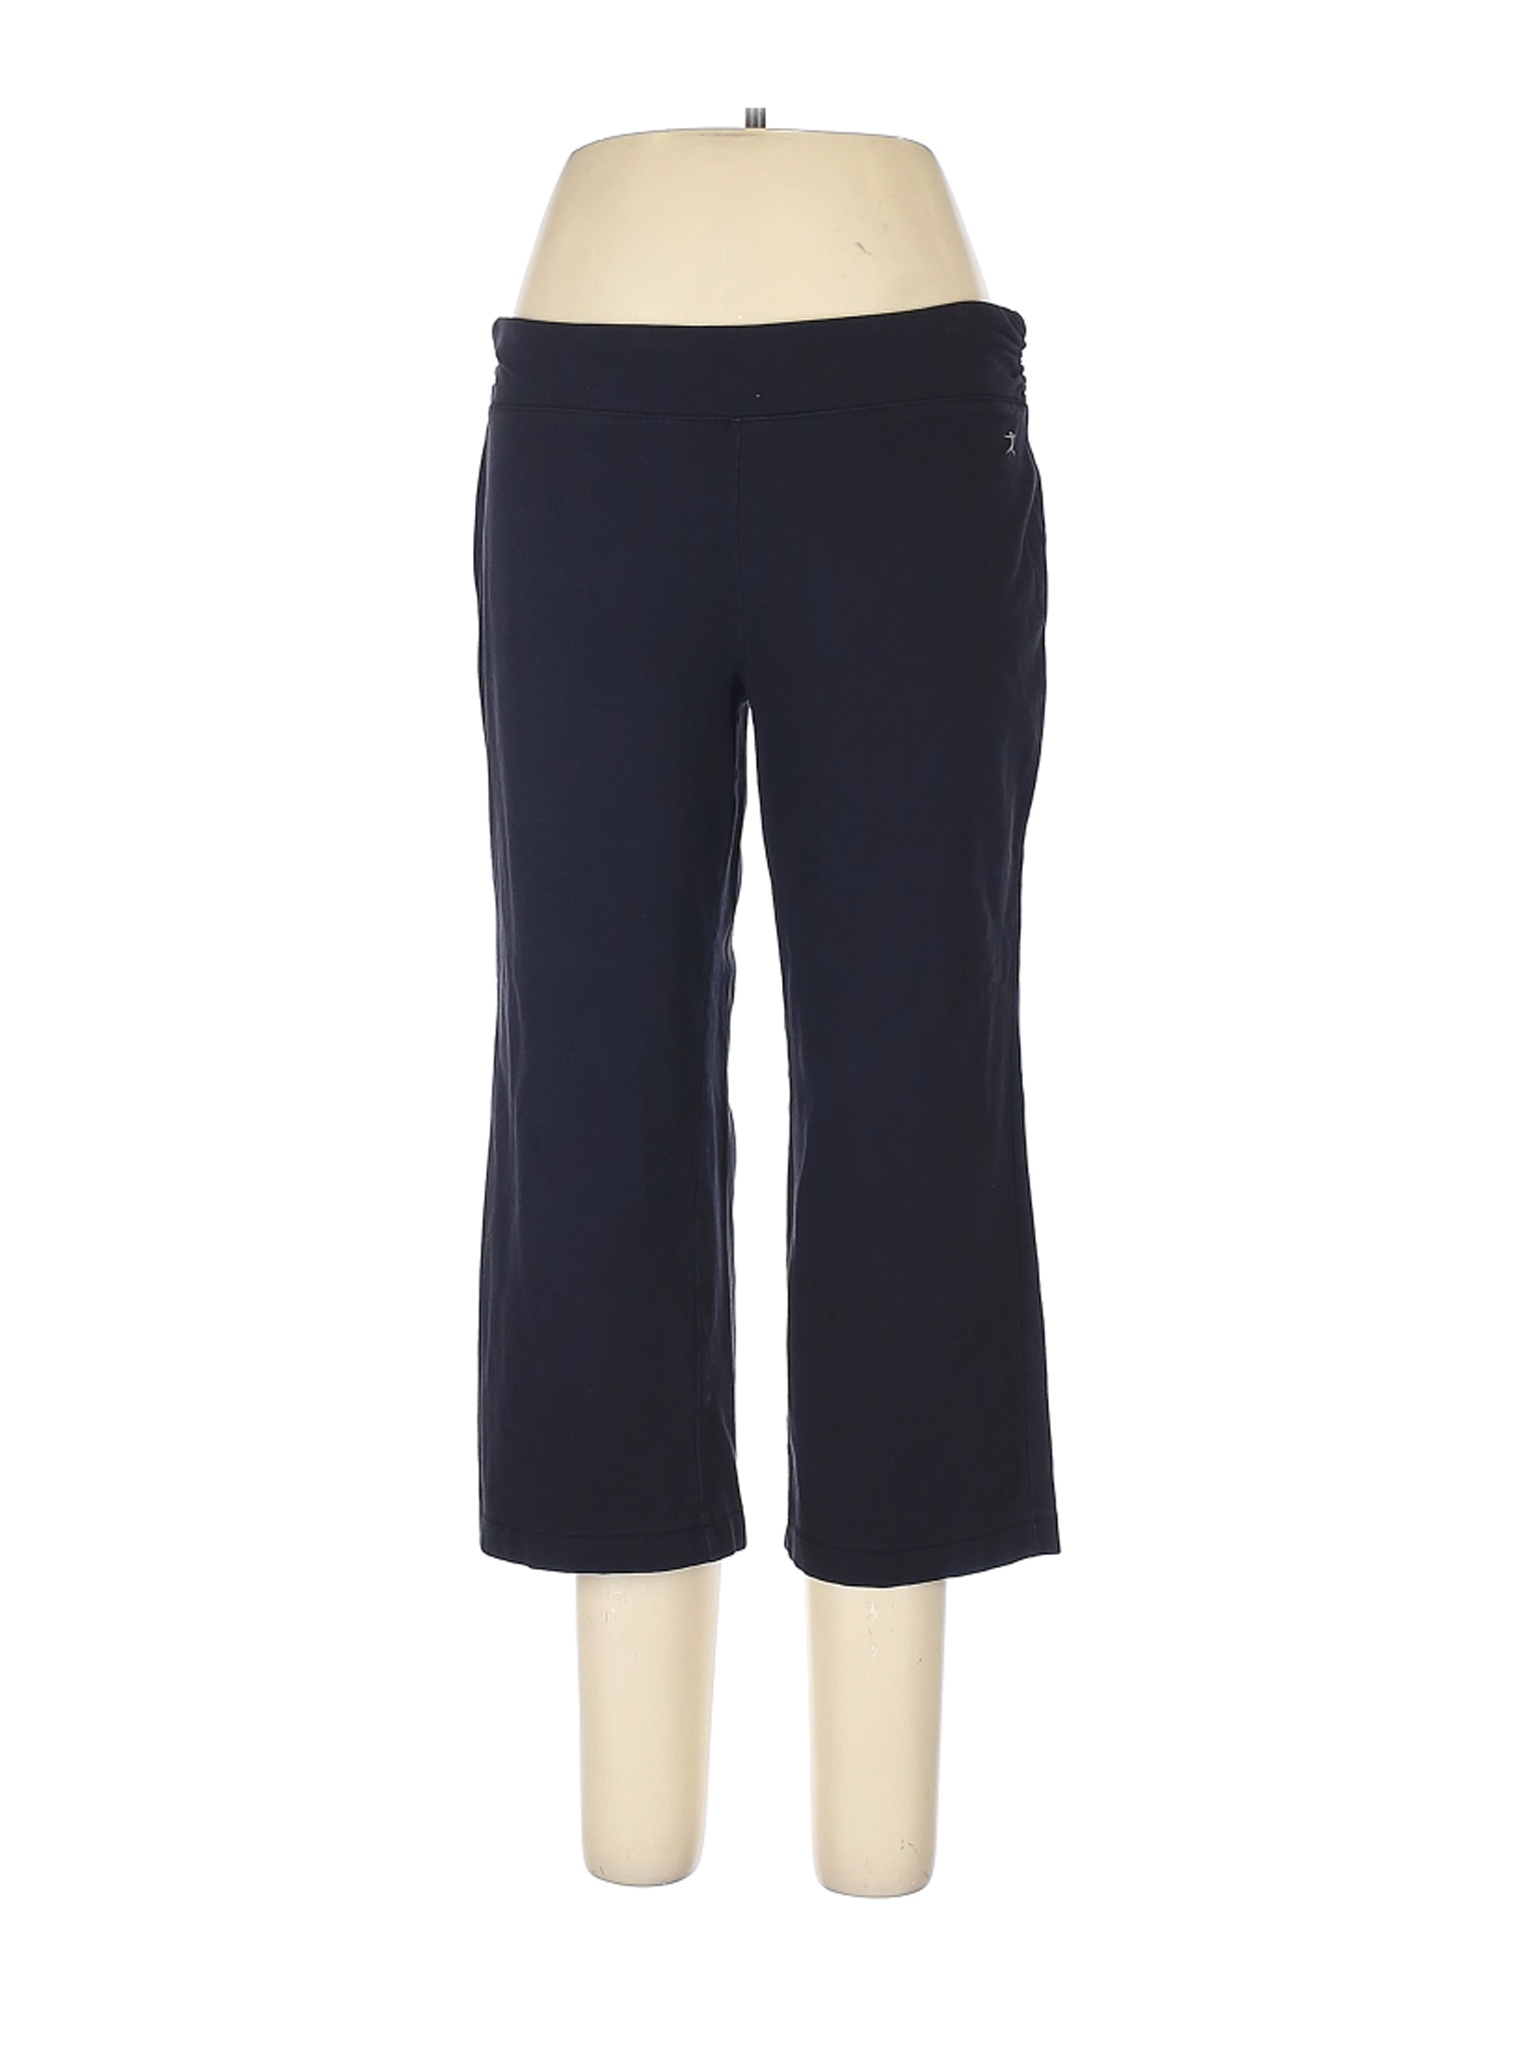 Danskin Now Women Blue Active Pants XL | eBay